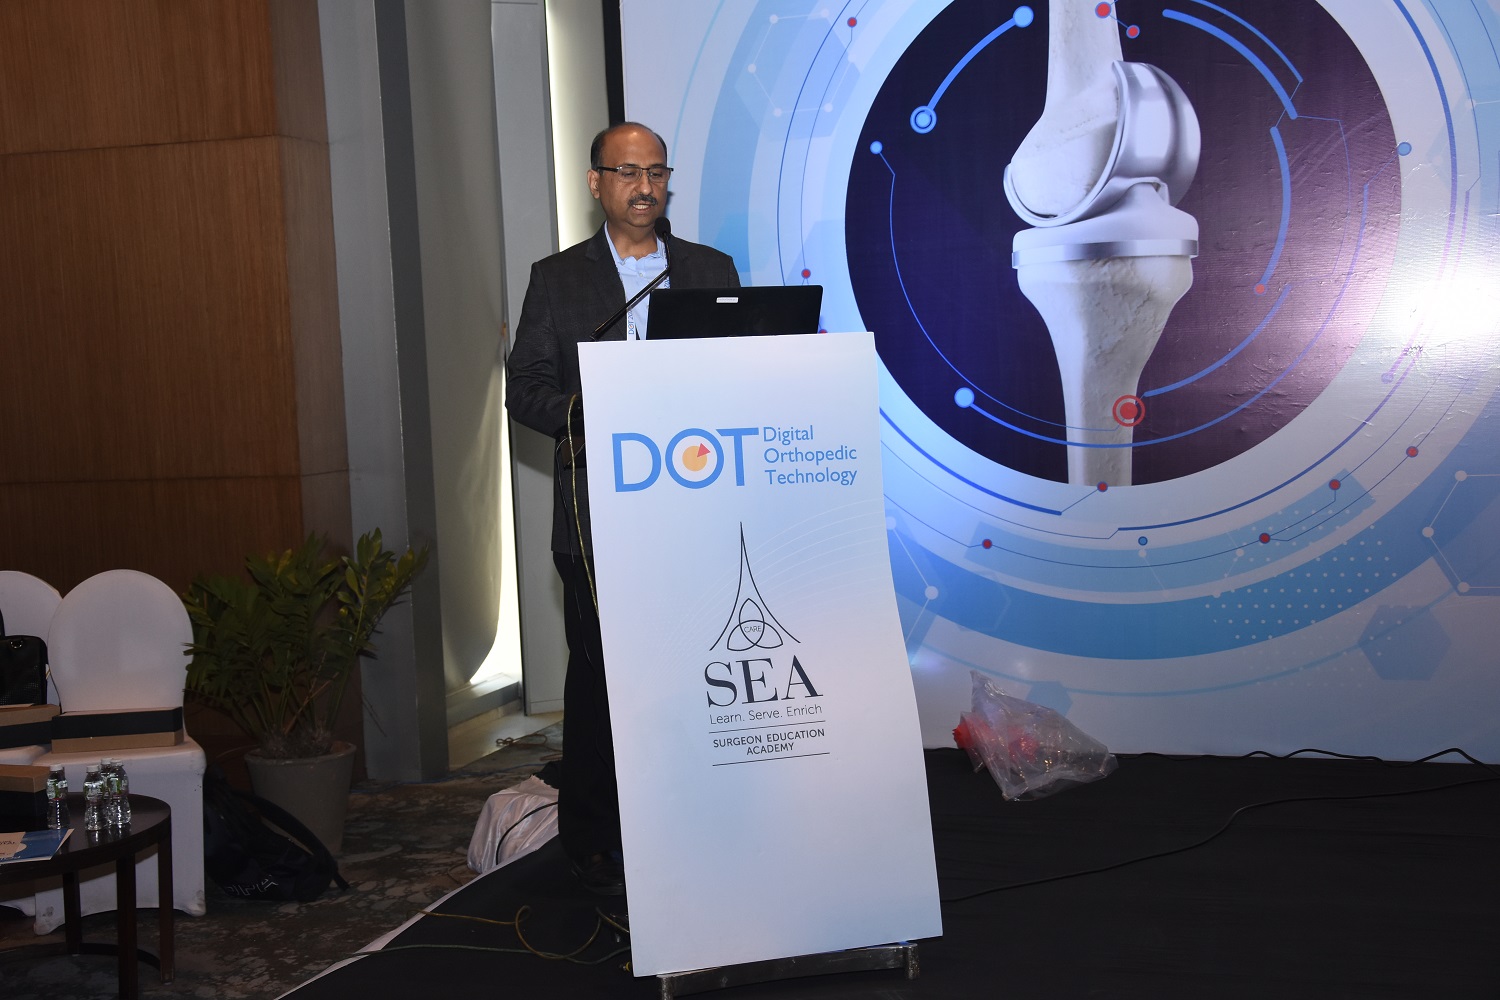 Doctors perform Live Knee Surgery using KNE3WIZ technology at Digital Orthopedic Technology (DOT 2020) workshop decoding=